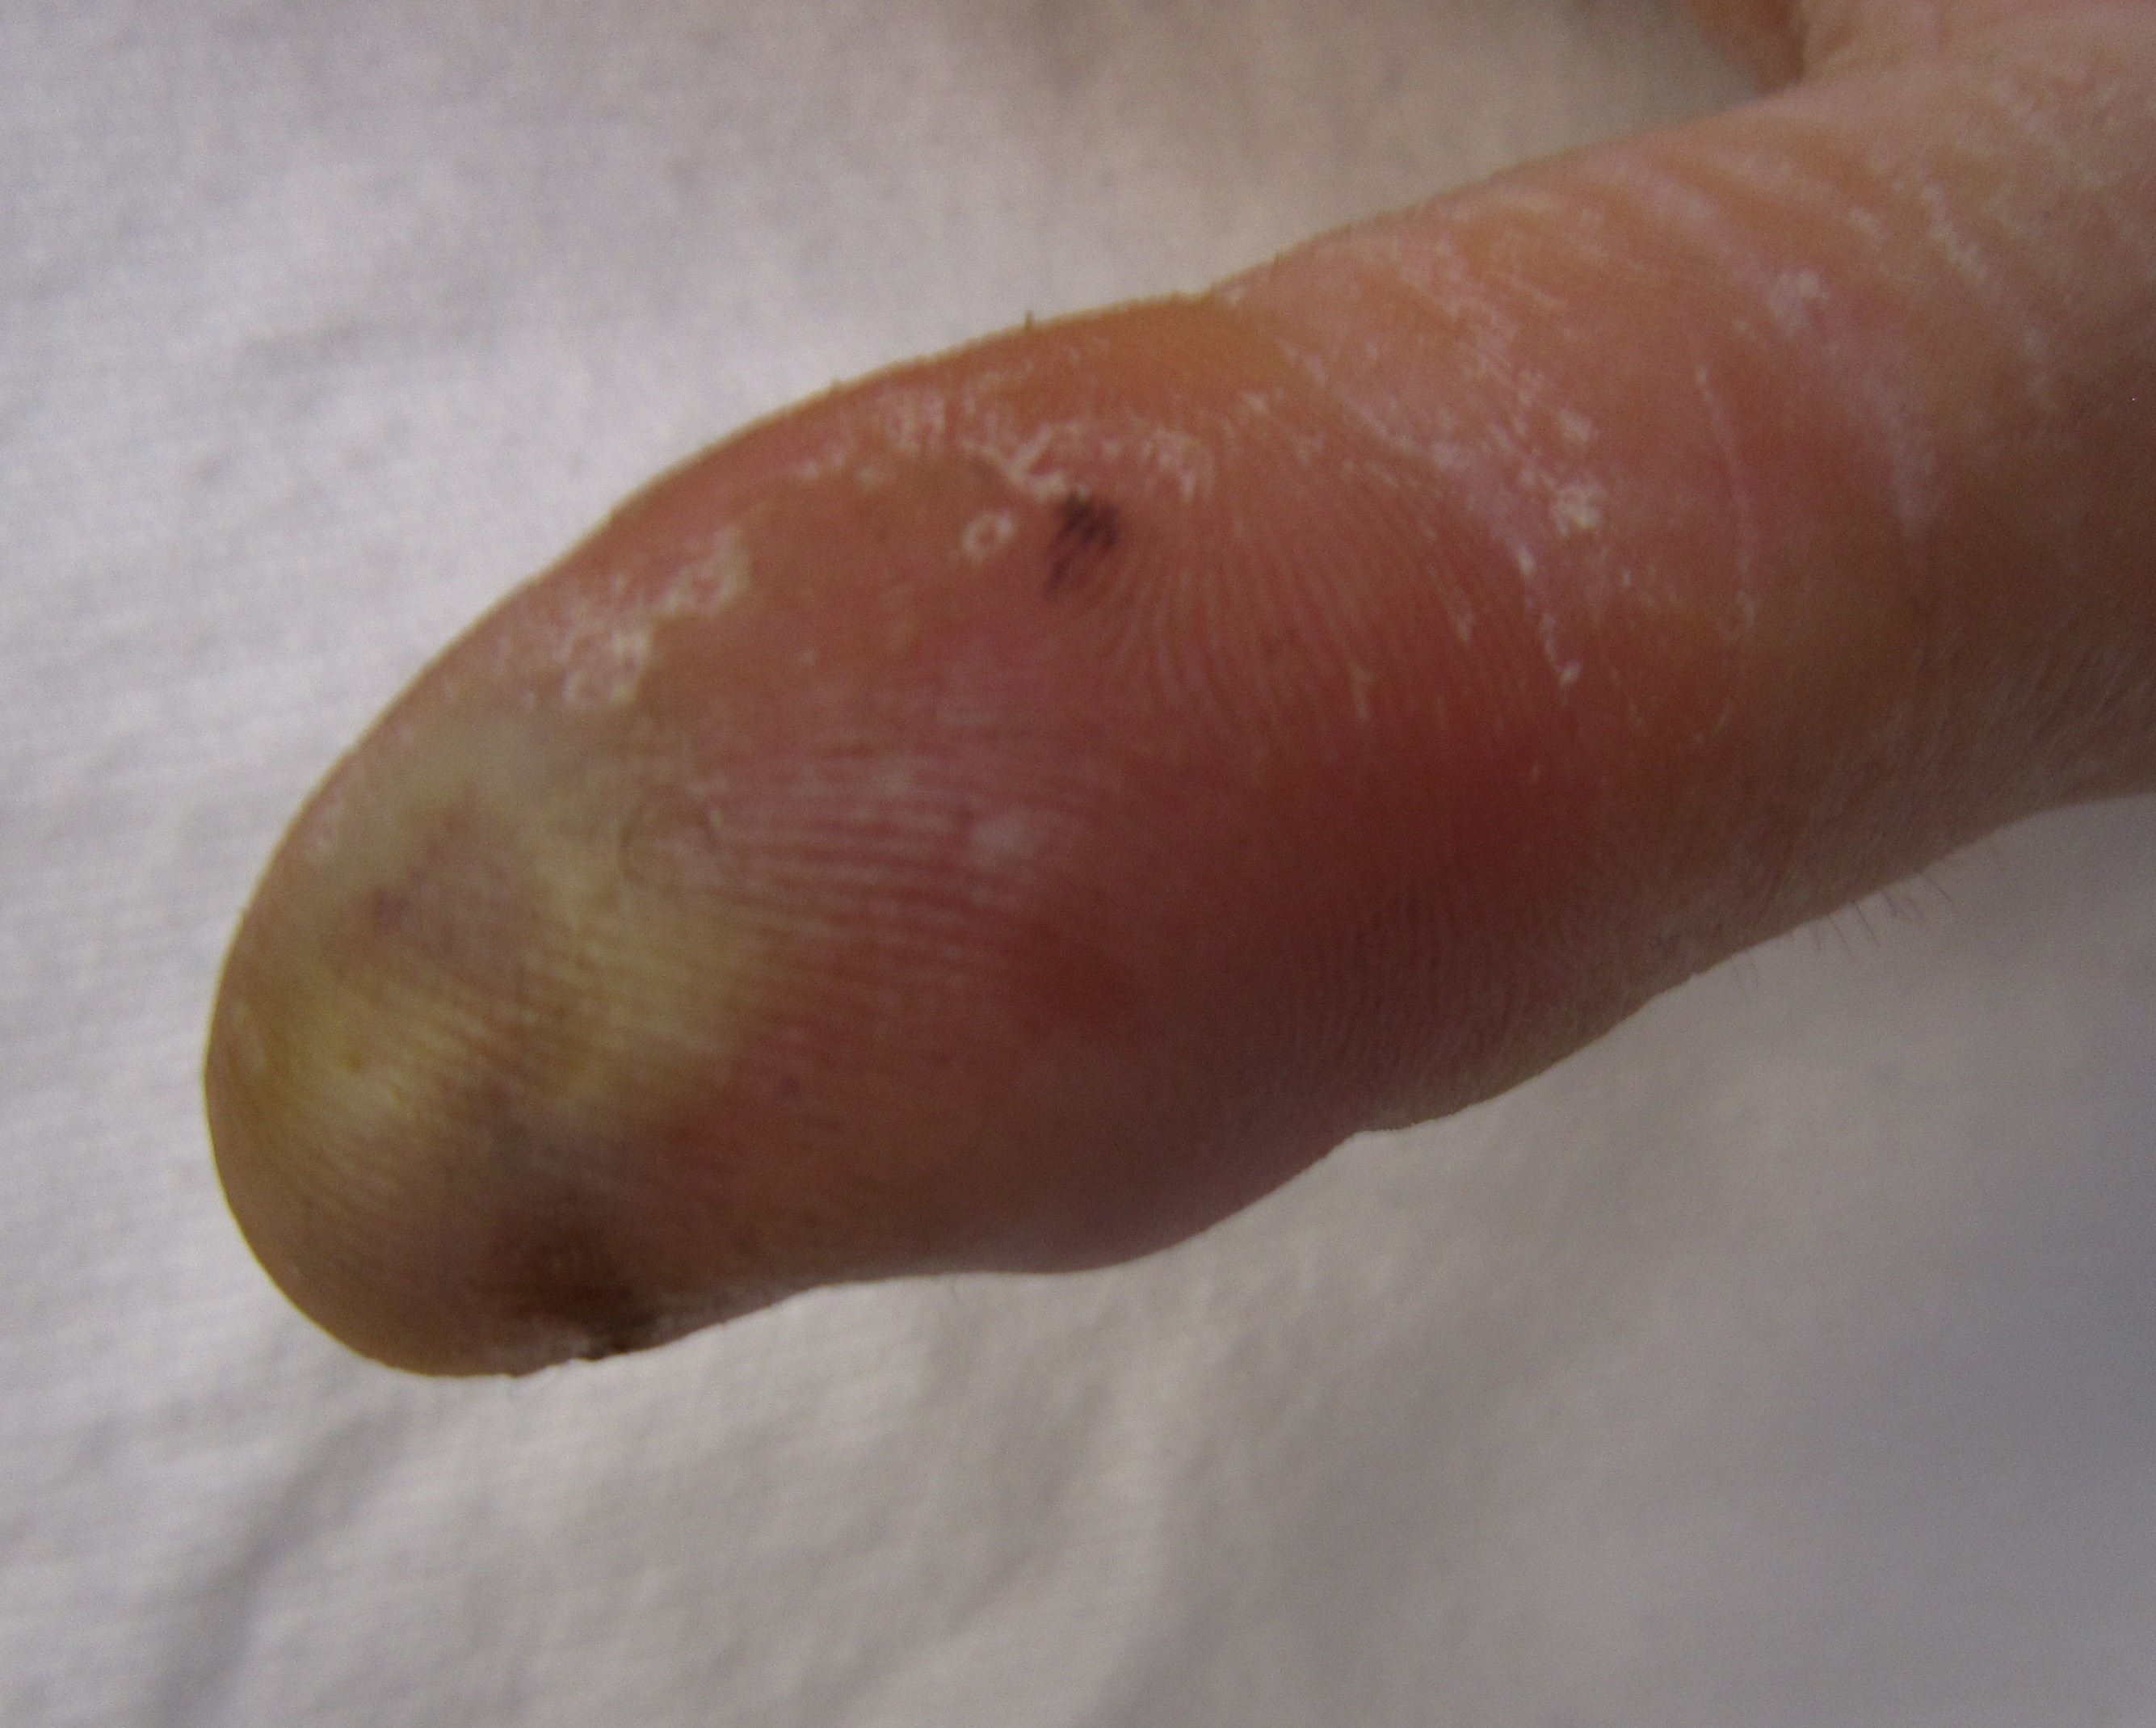 Felon - finger pulp infection - YouTube